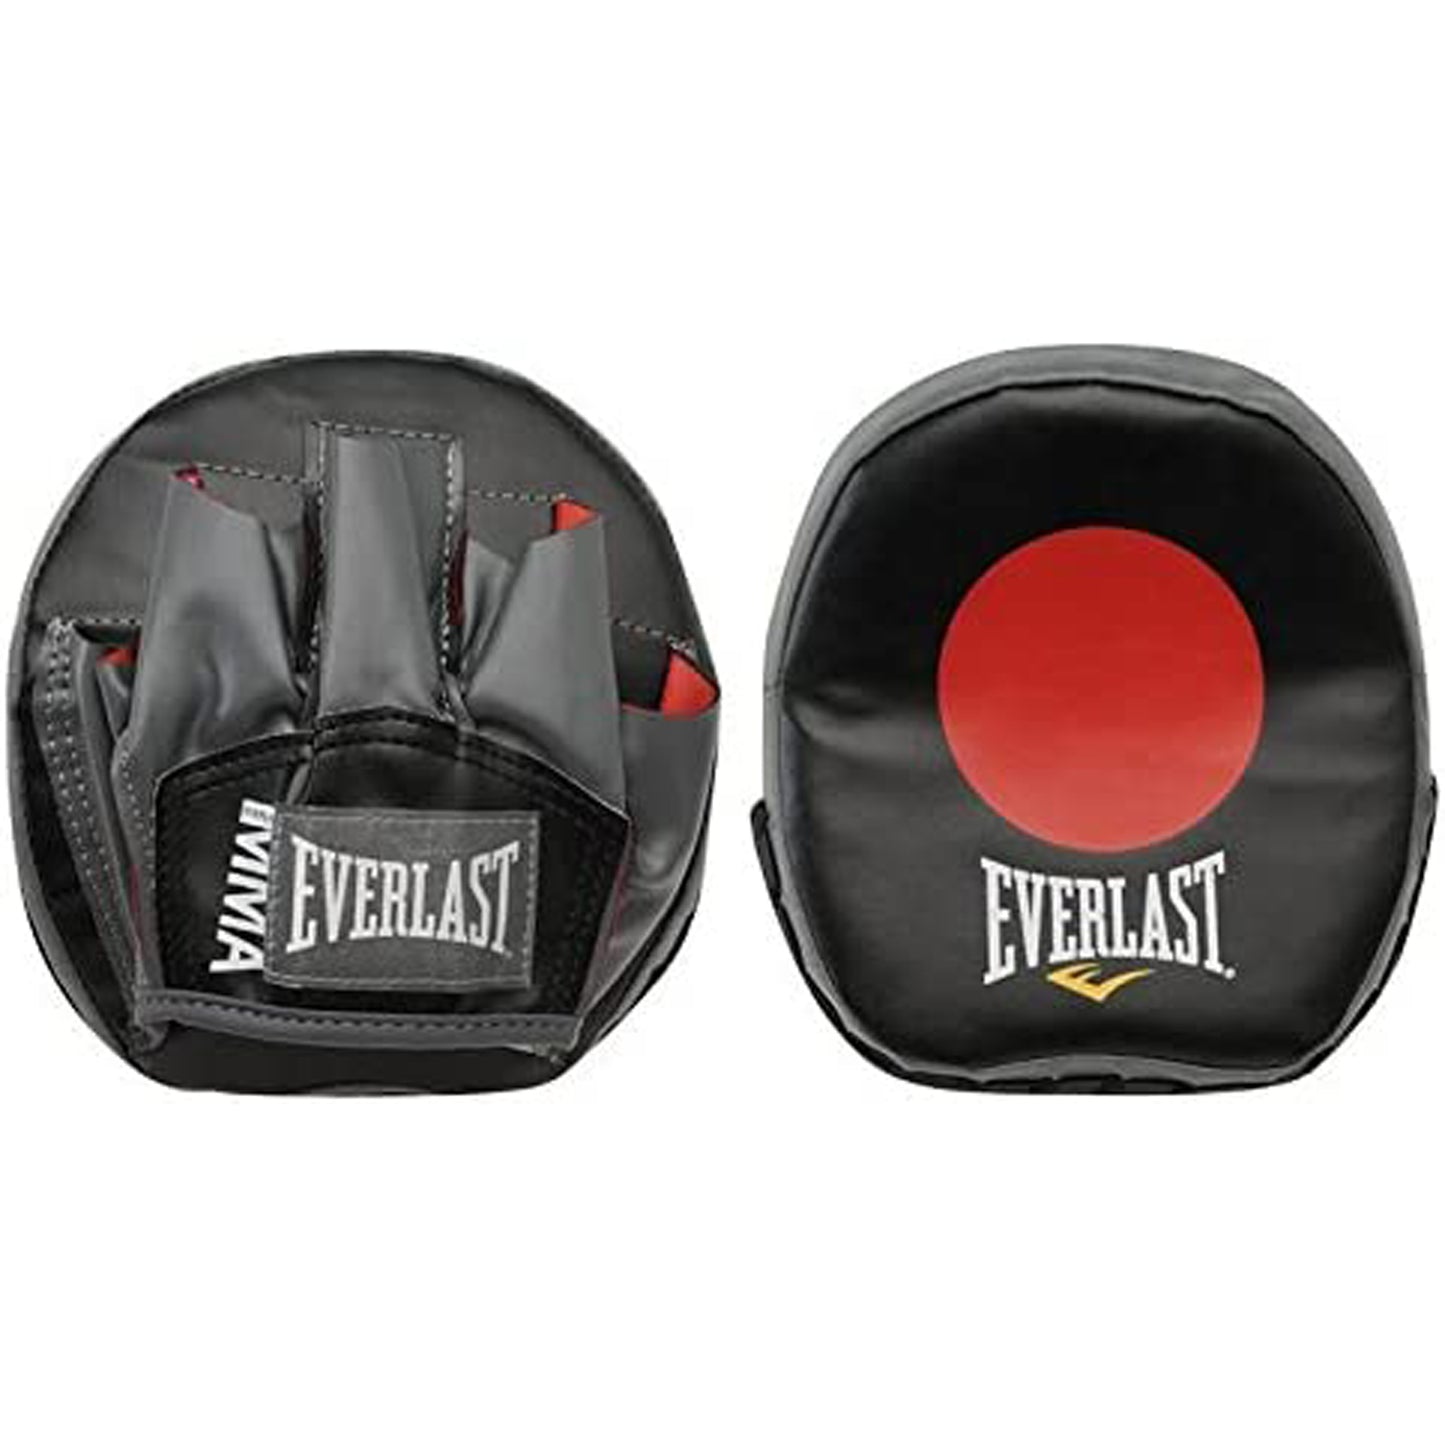 Everlast Boxing Punch Mma Focus Mitts Pad, Black - Free Size - Best Price online Prokicksports.com